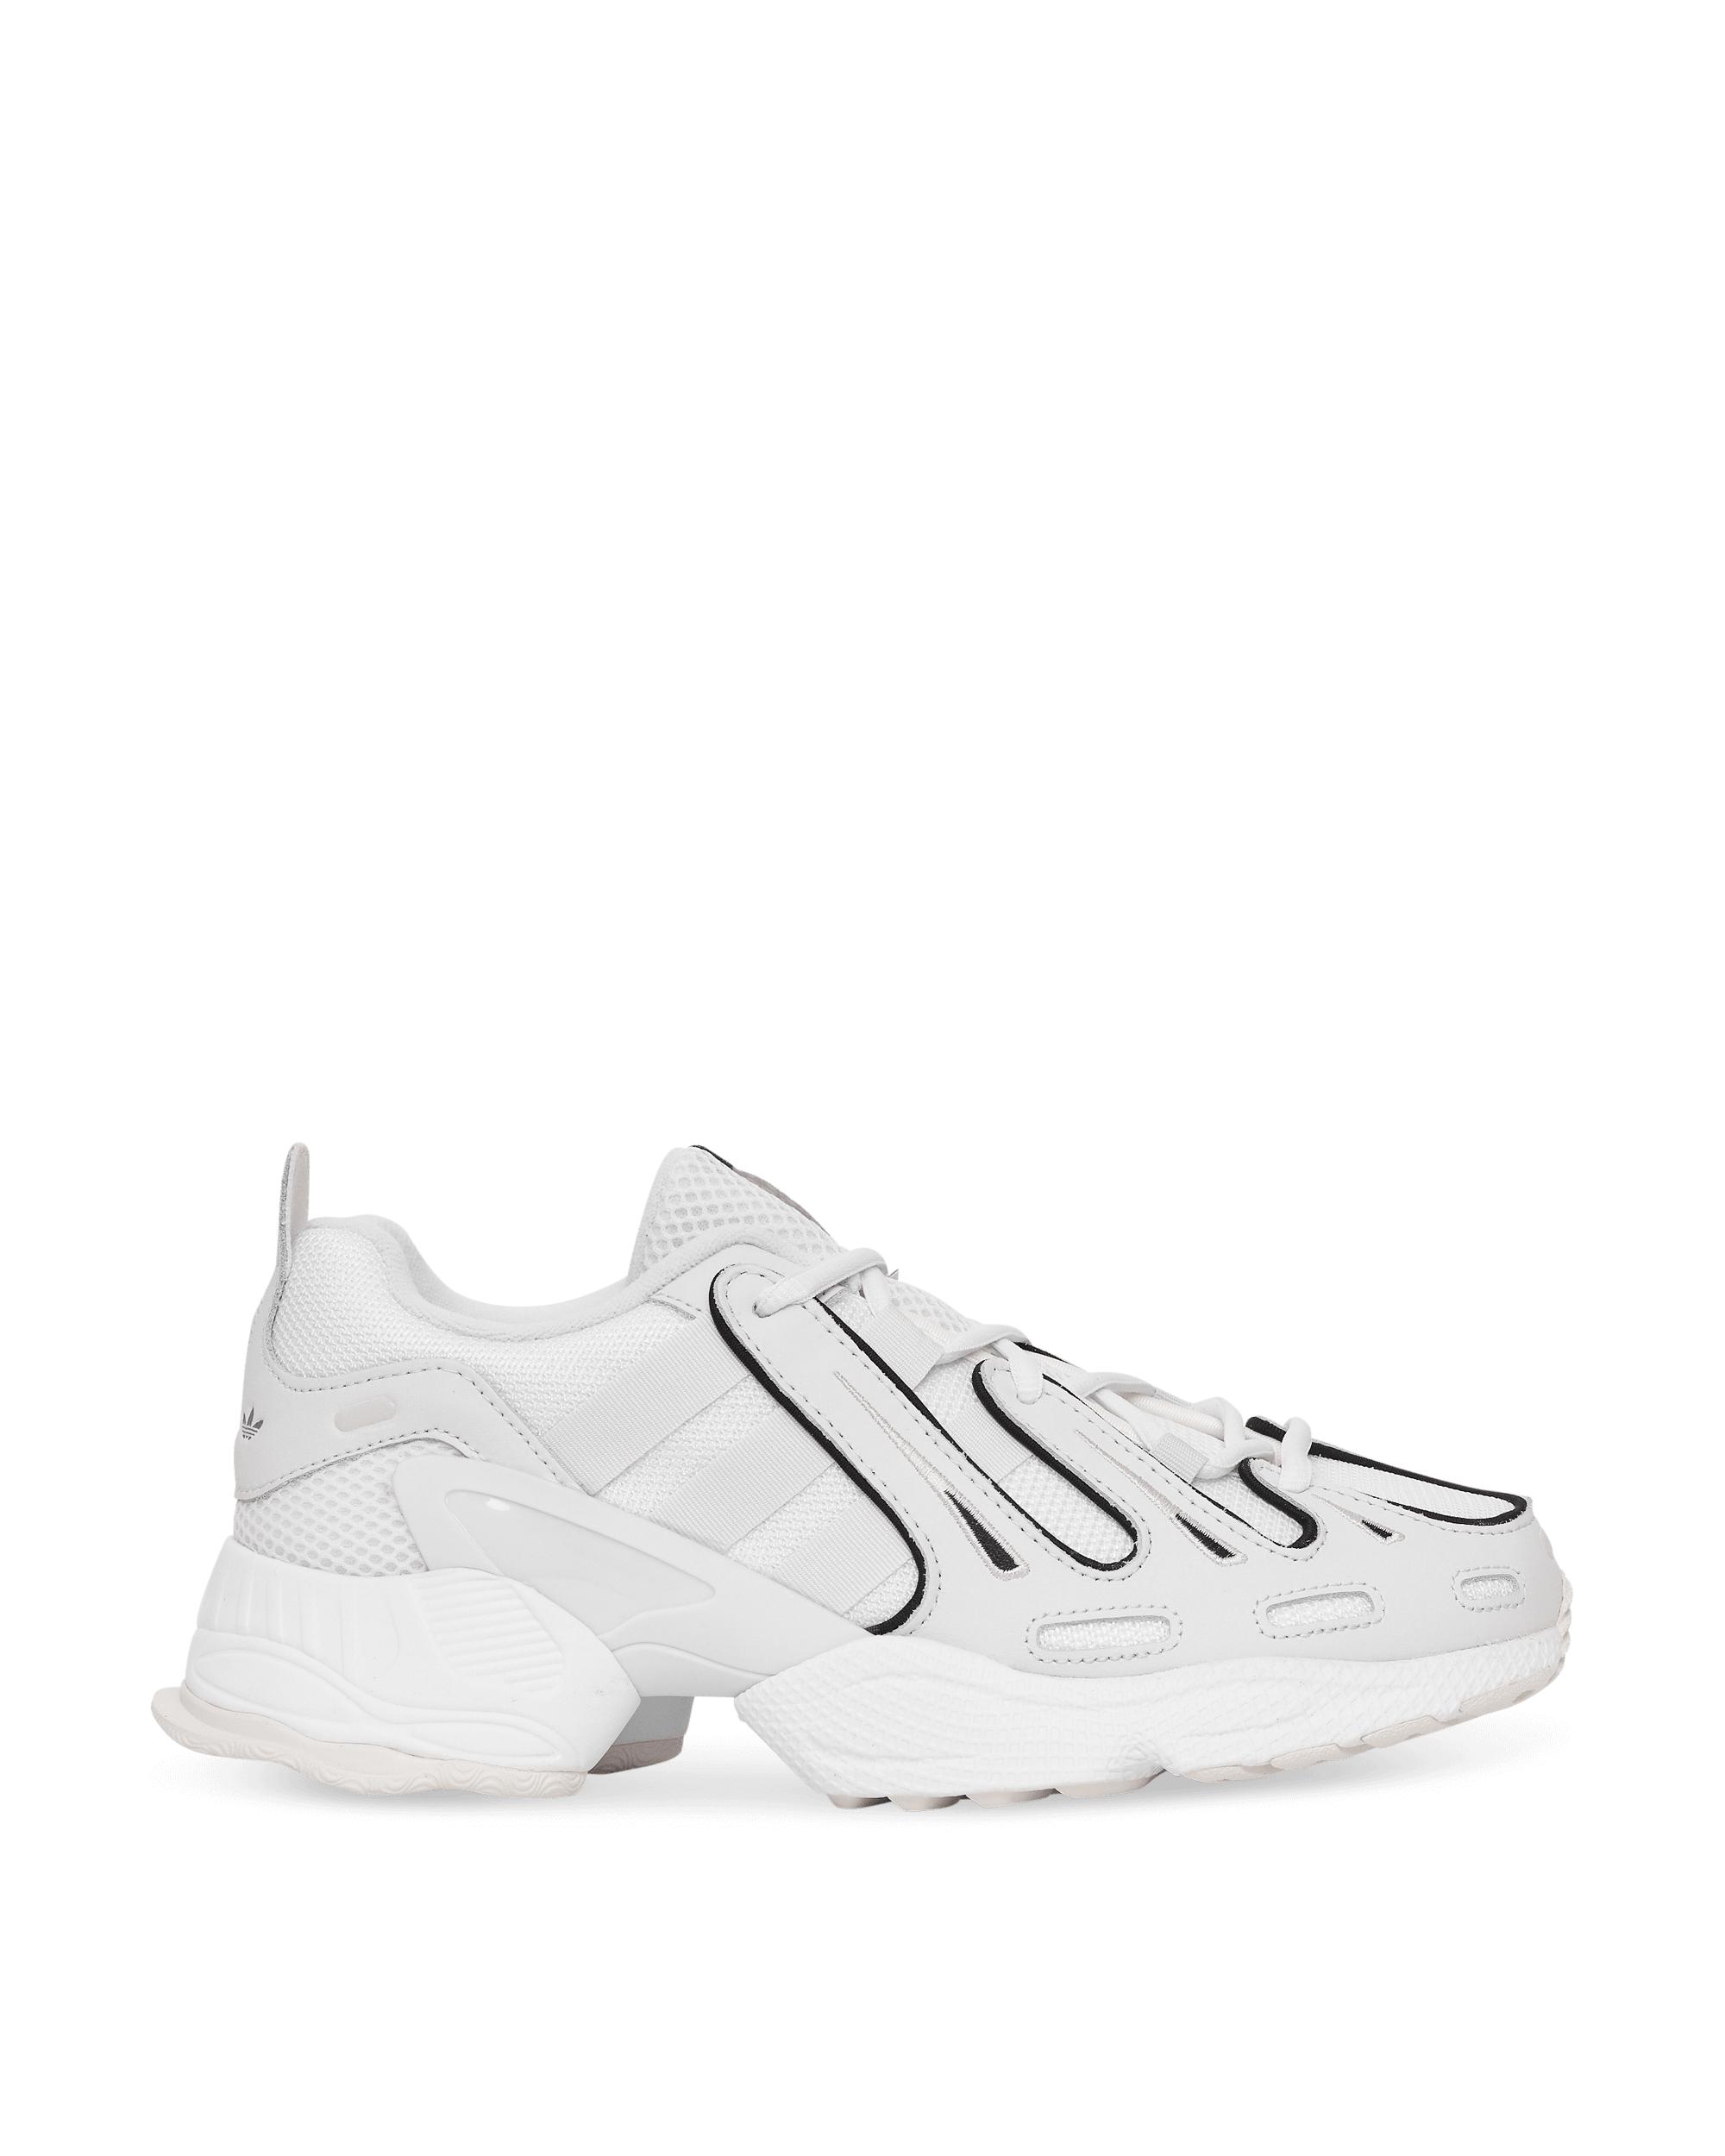 adidas Sneakers Uomo Eqt Gazelle Ee7744 in White/Black (White) for ... سحب مبلغ من البطاقة الائتمانية بدون علمي